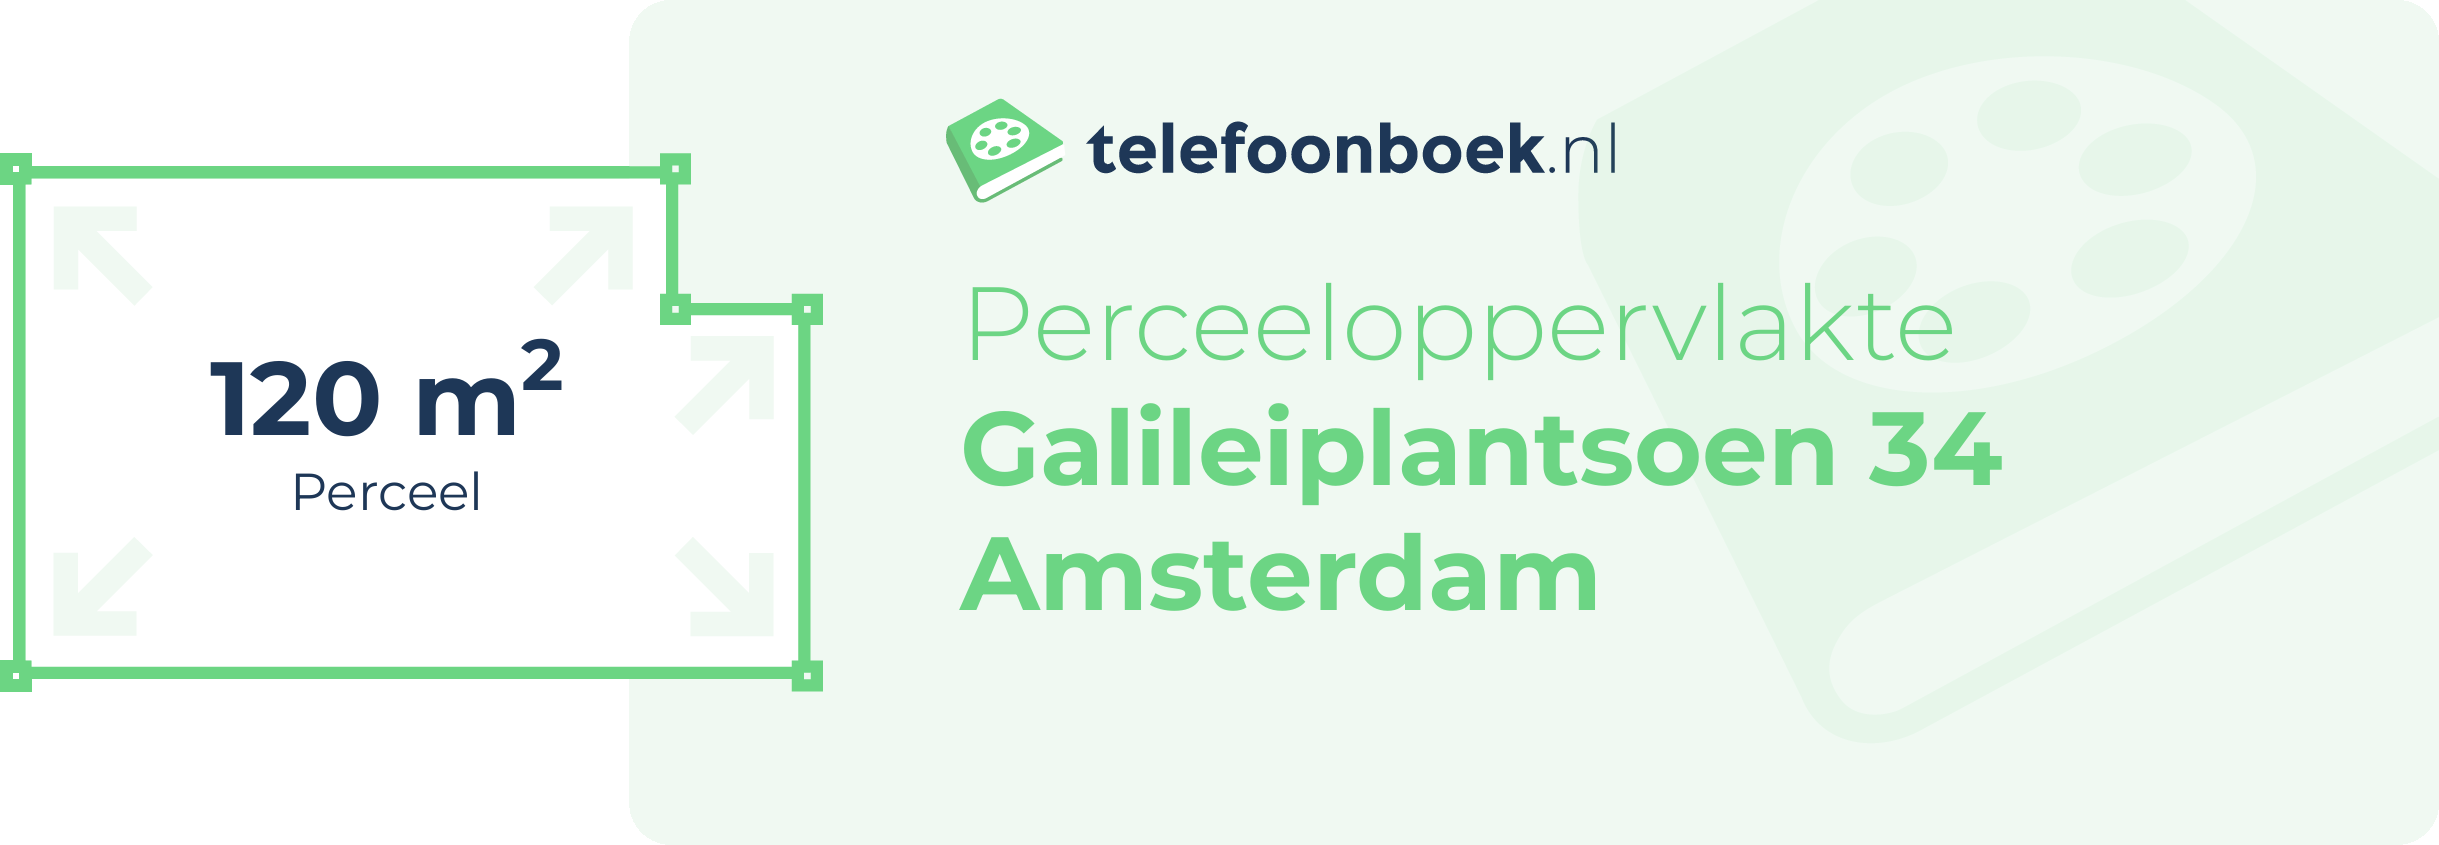 Perceeloppervlakte Galileiplantsoen 34 Amsterdam